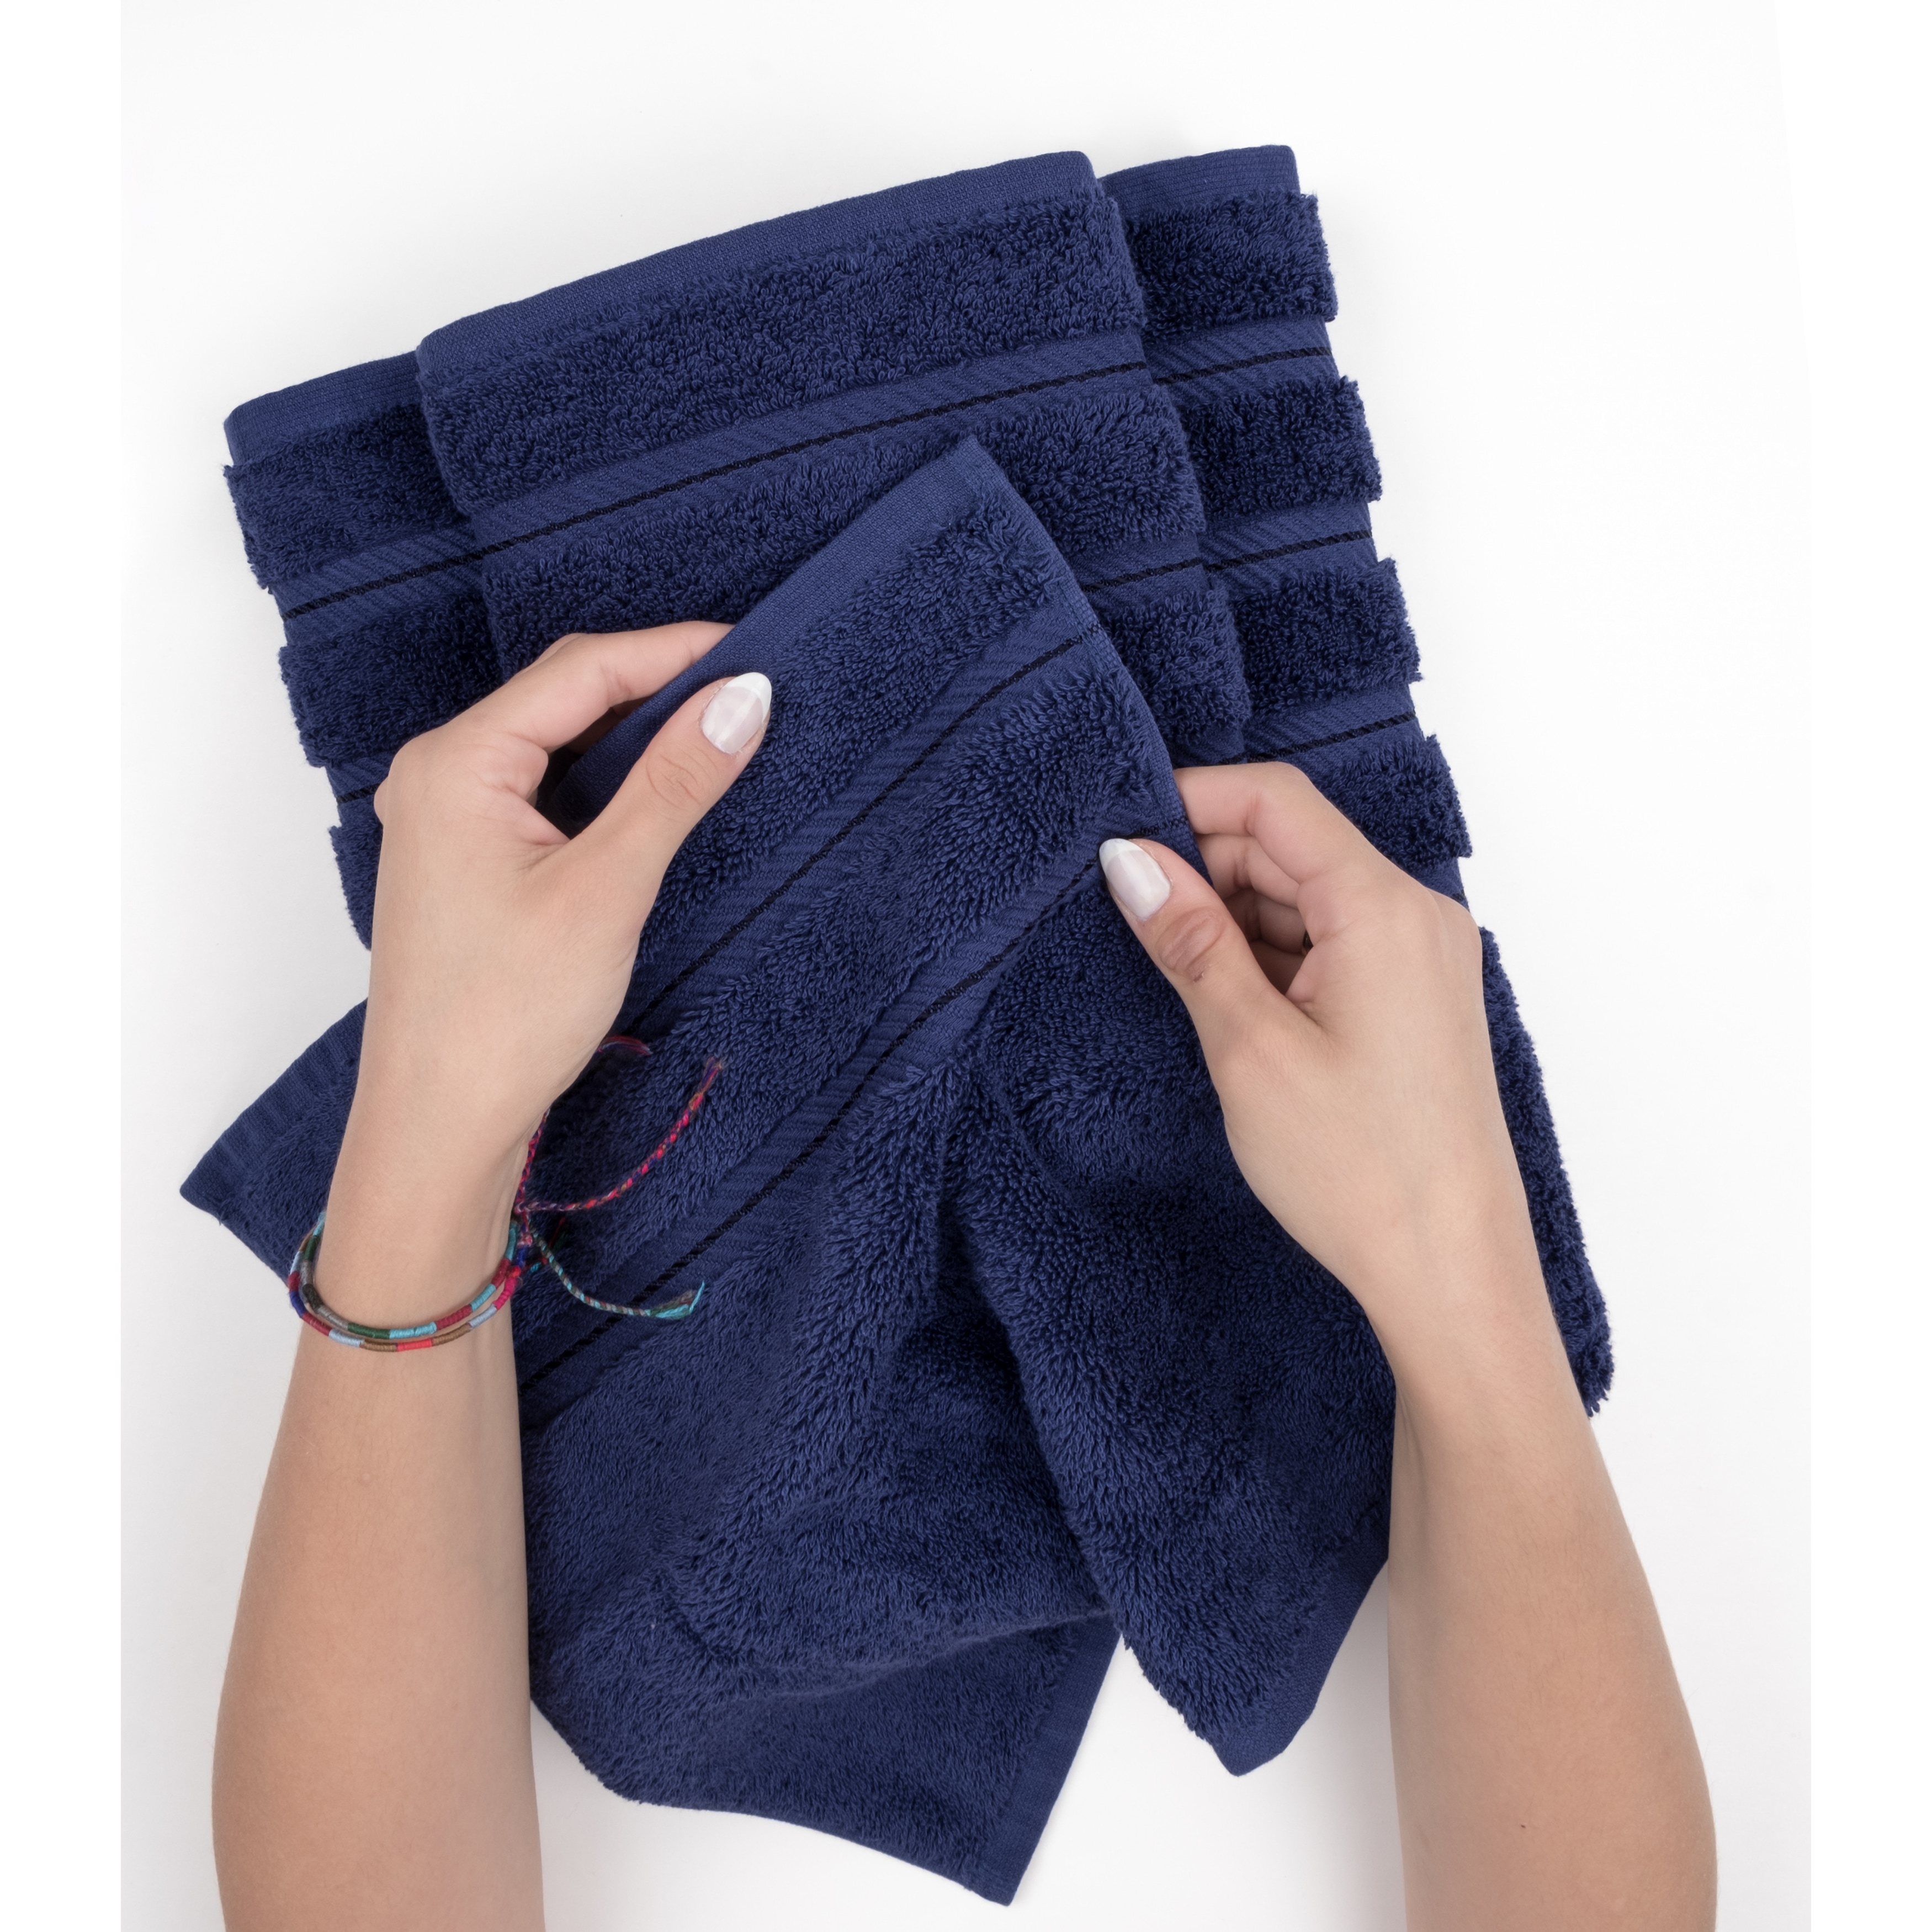 American Soft Linen, 6 Piece Bath Towel Set, 100% Turkish Carde Cotton  Towels for Bathroom, Sky Blue 